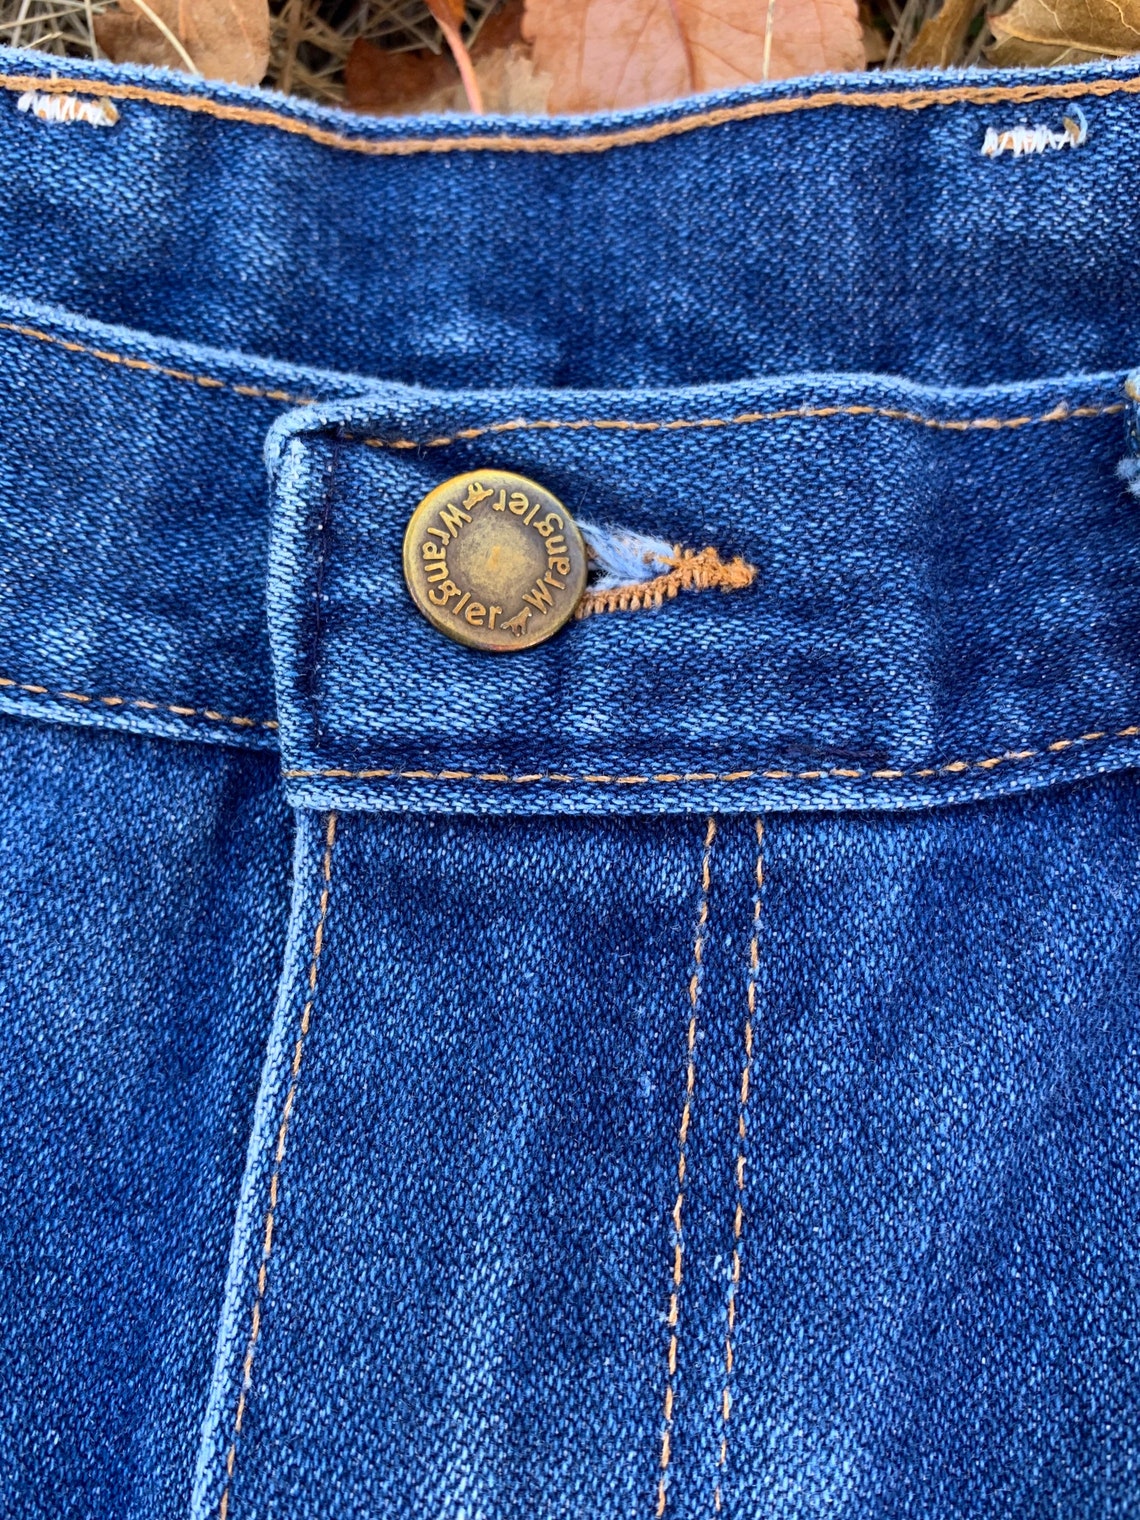 Vintage 1970s Ladies No Fault Wrangler Jeans /70s Wranglers/ - Etsy